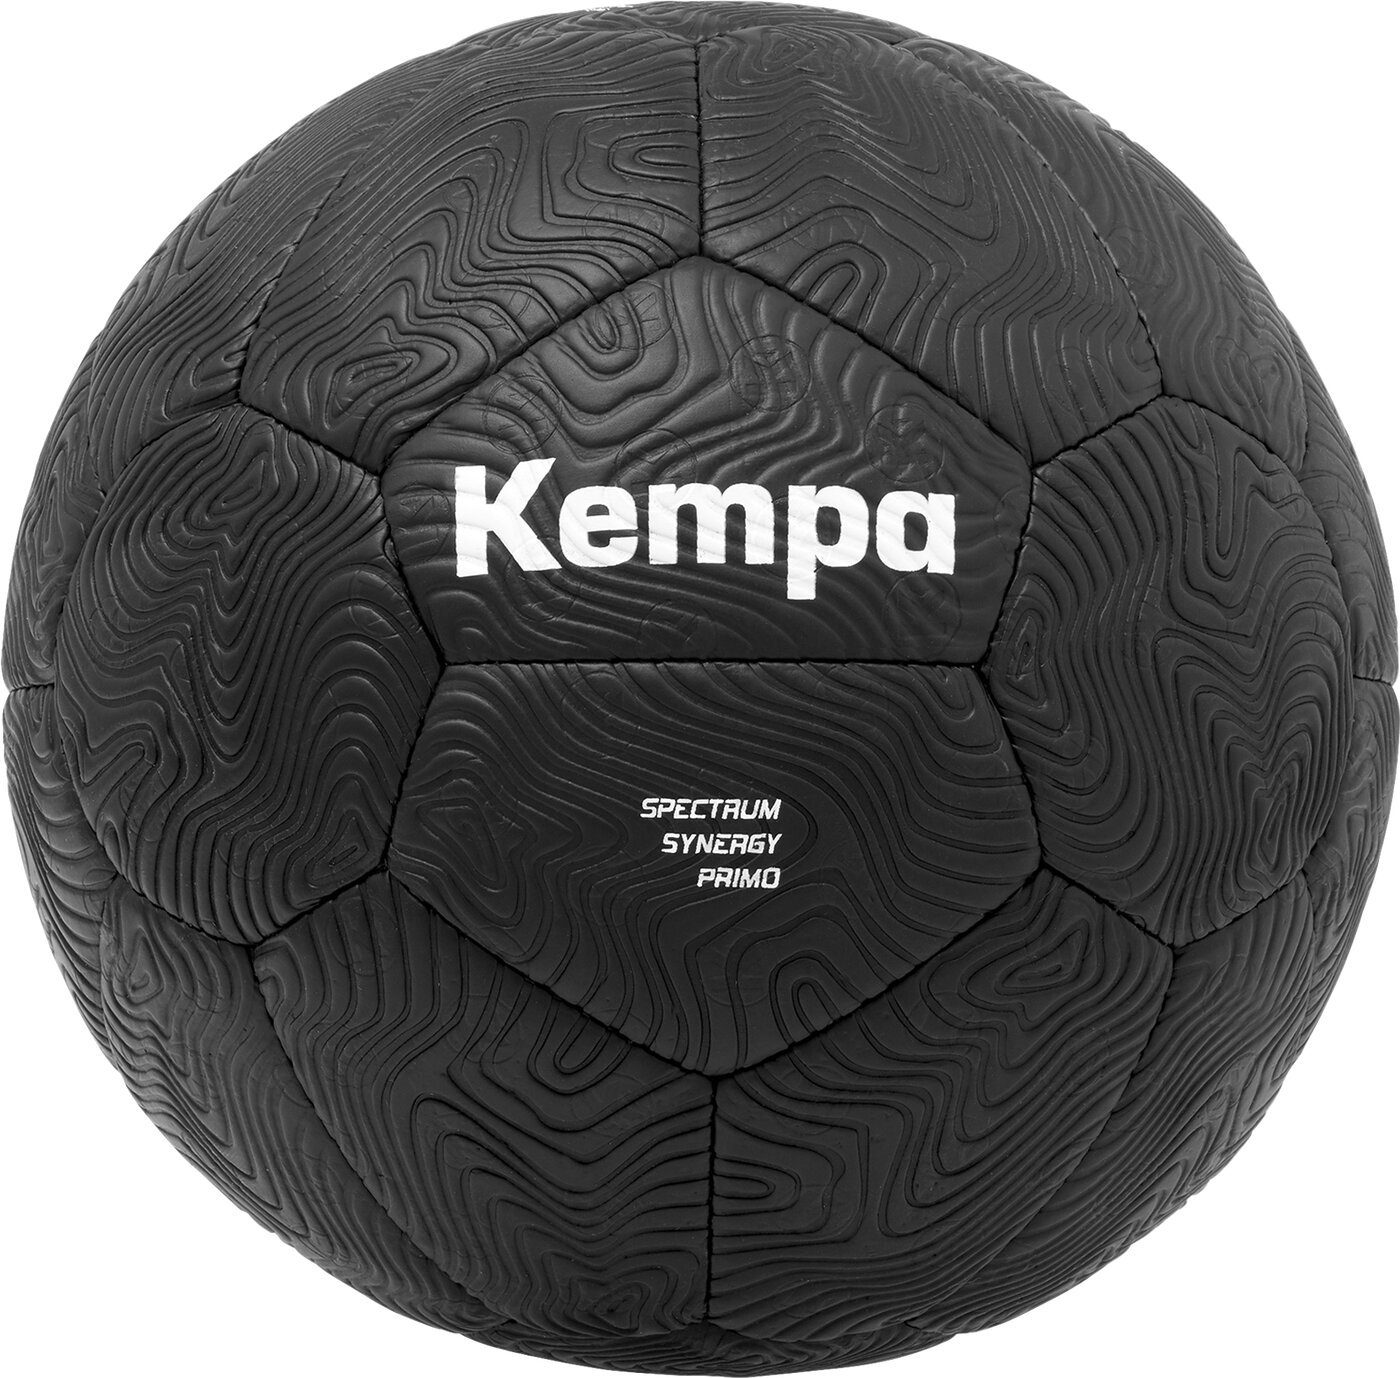 Kempa Handball SPECTRUM SYNERGY PRIMO SCHWARZ